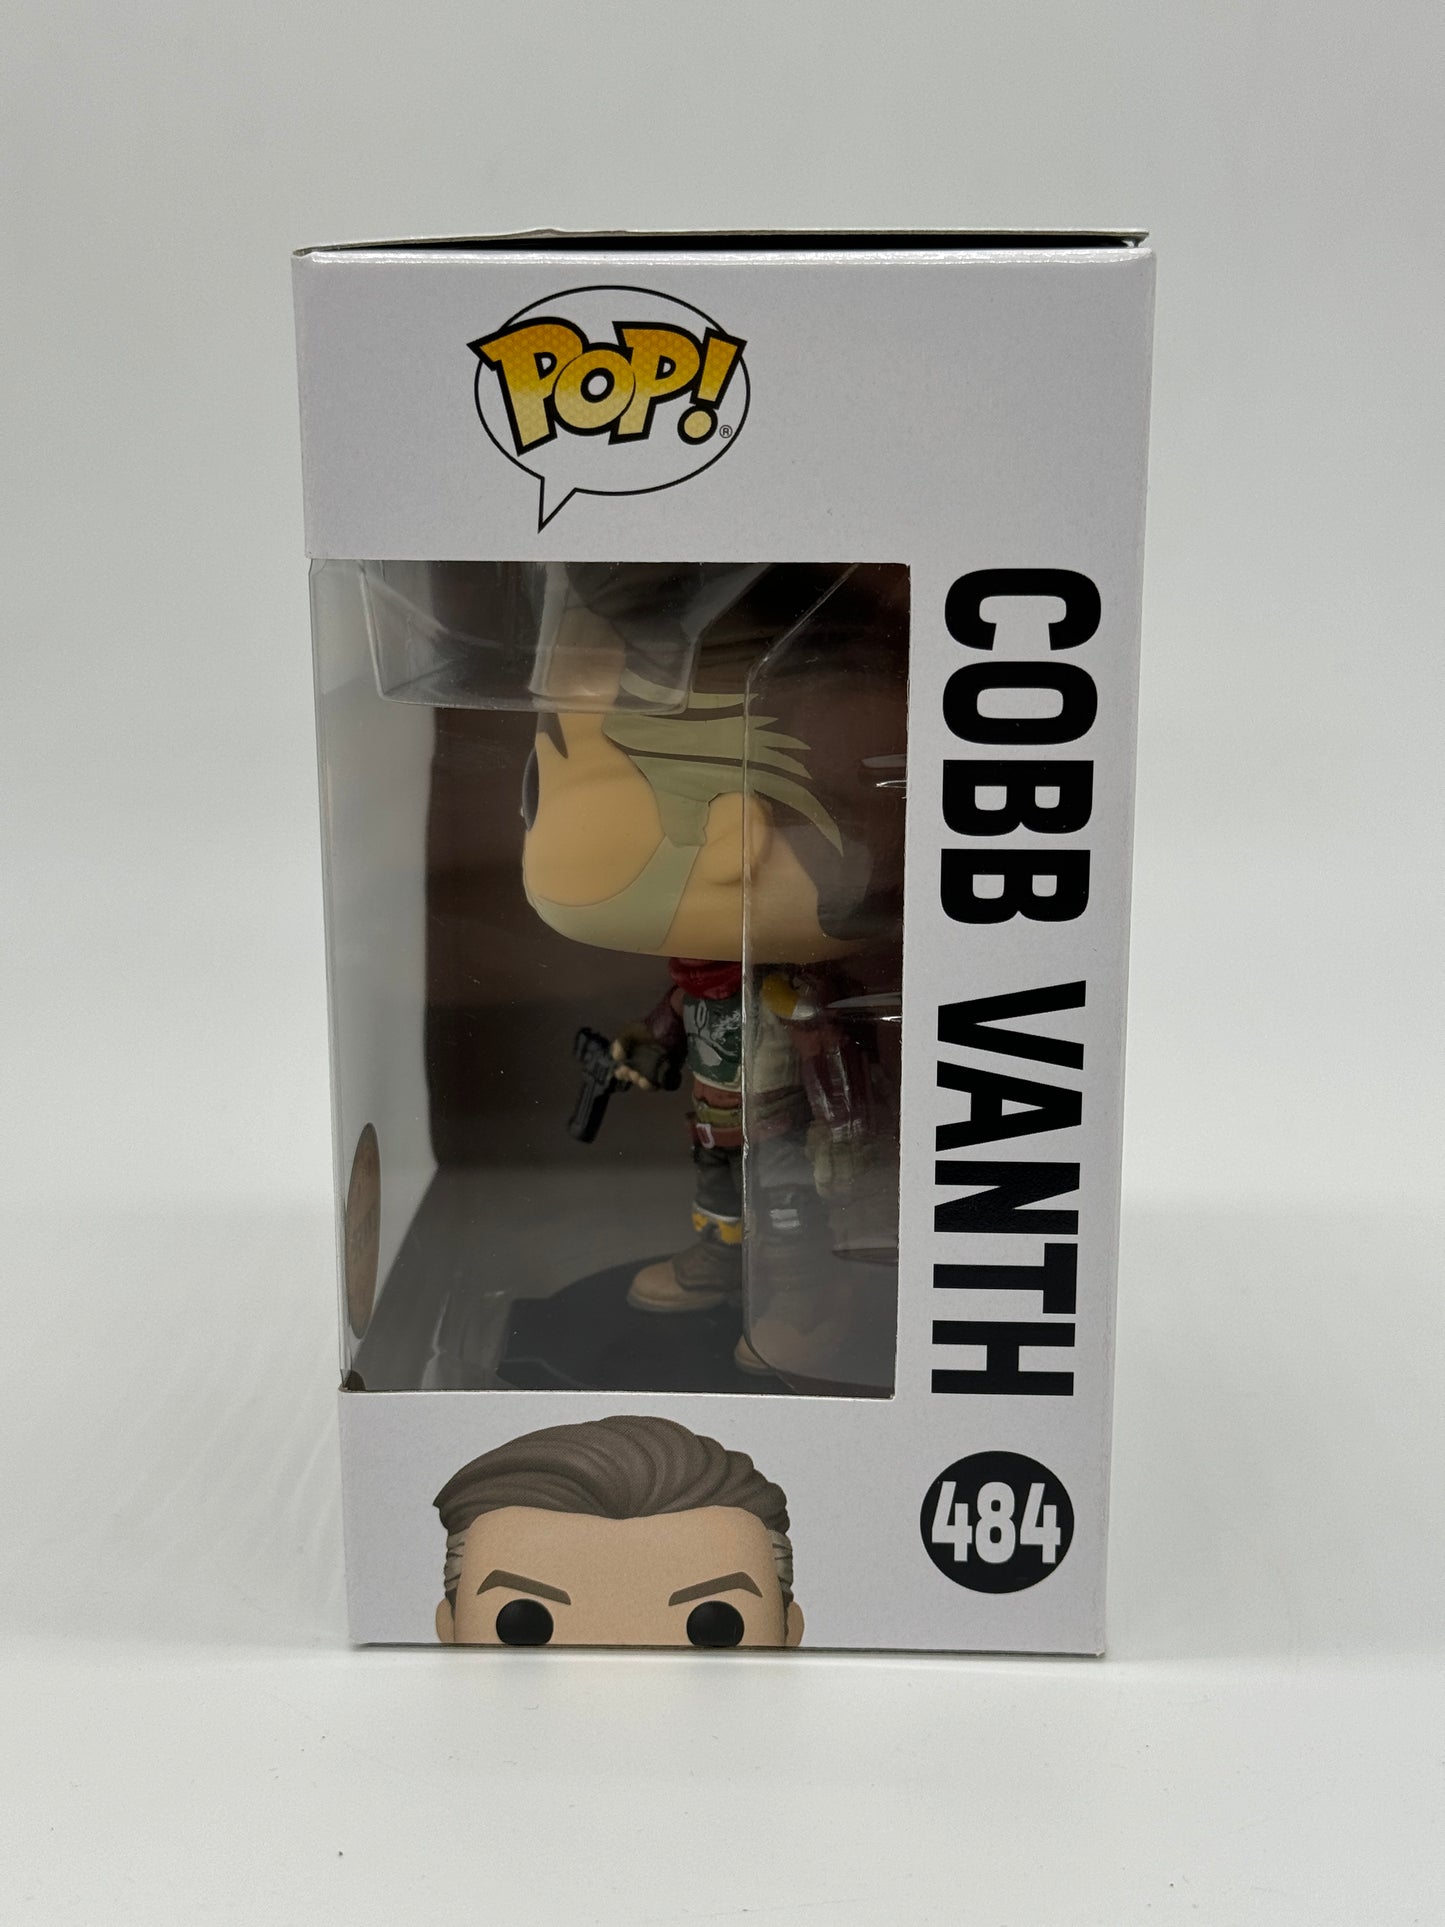 Funko Pop! "Cobb Vanth" Chase Limited Edition Star Wars #484 Bobble Head (2021)